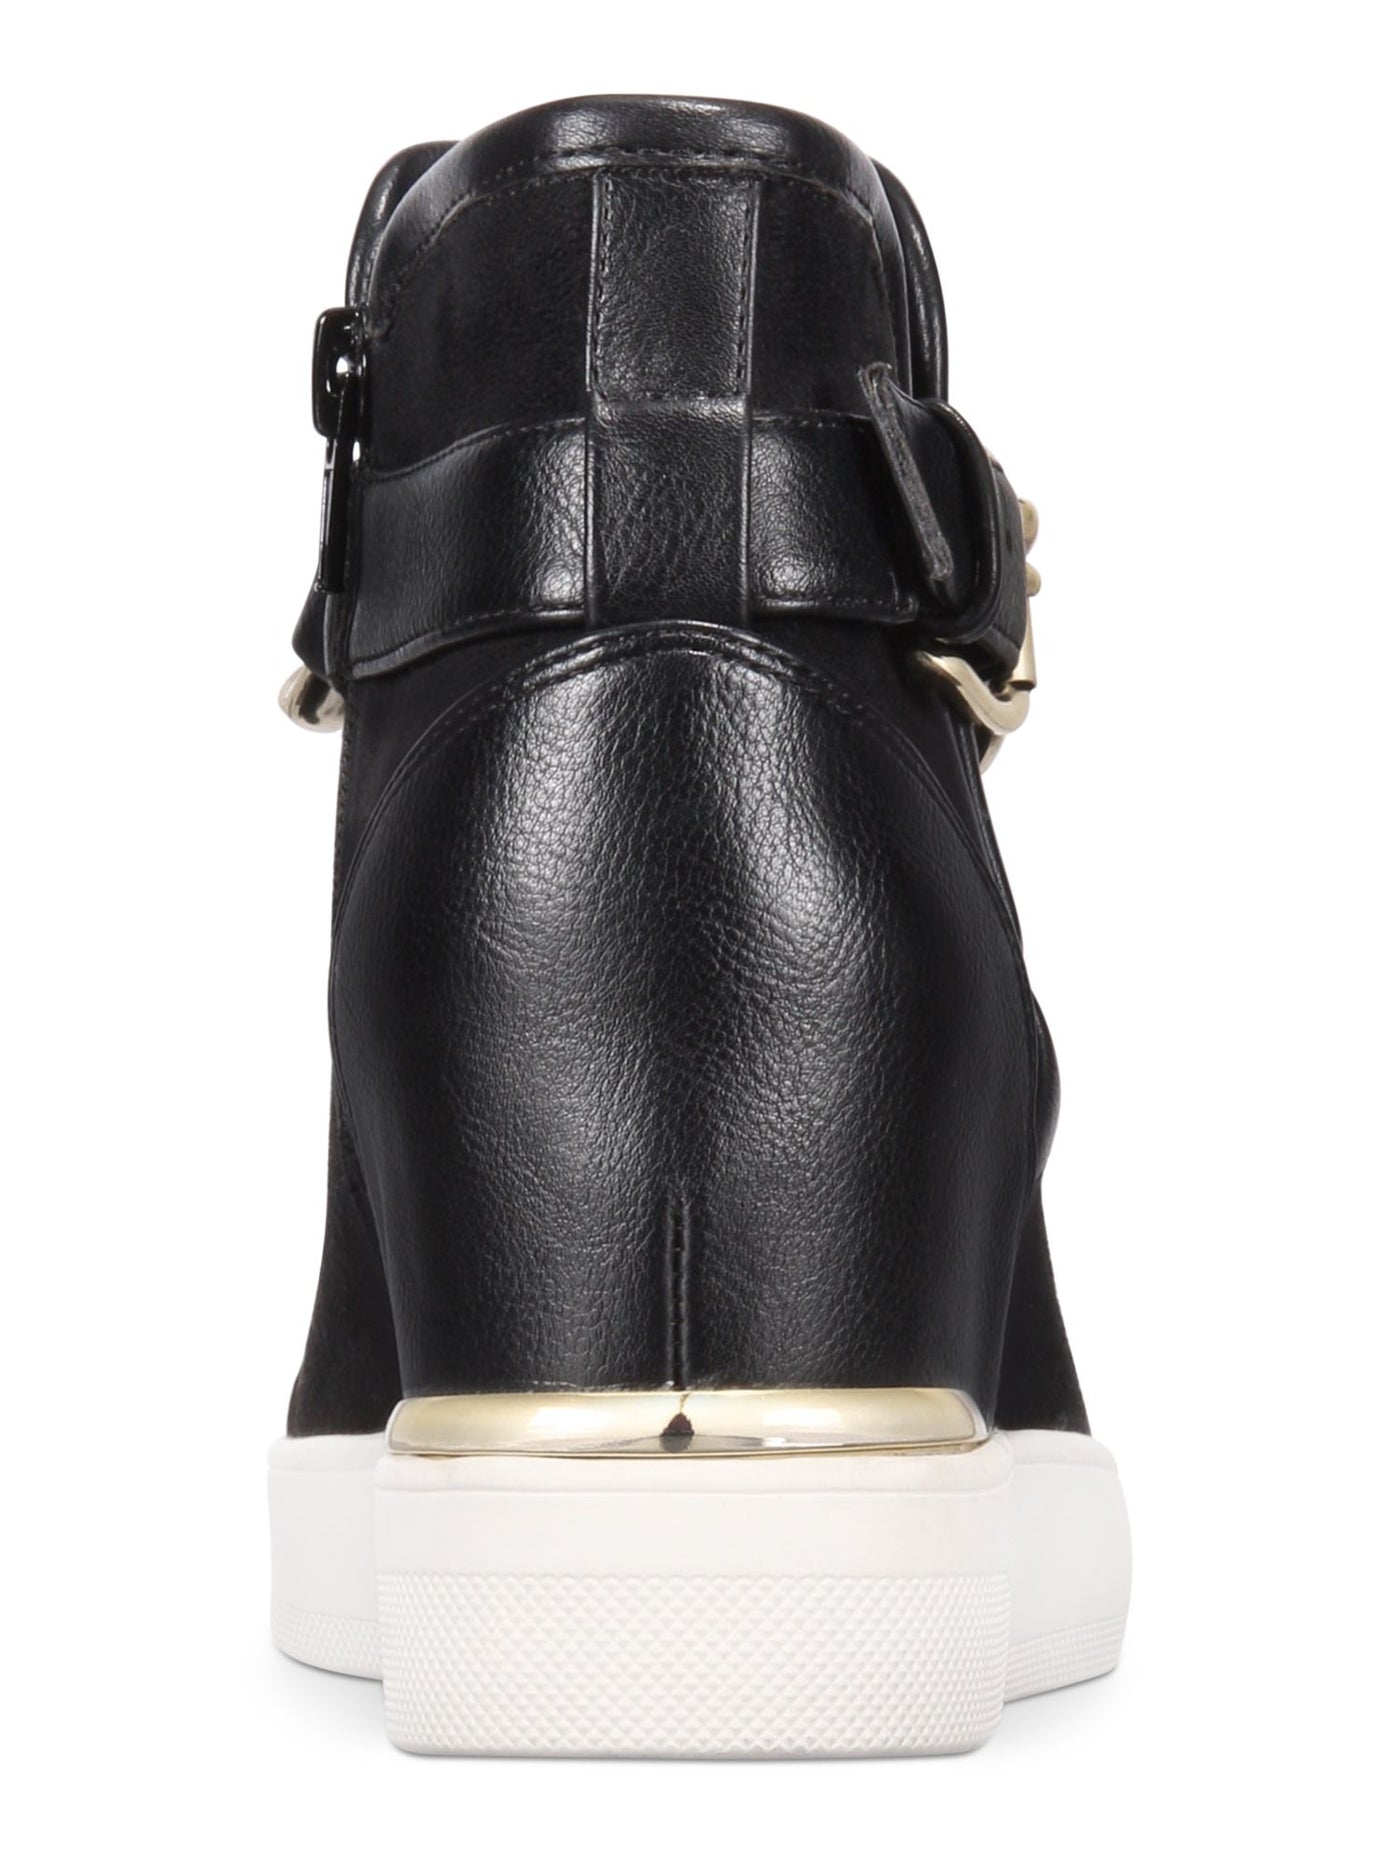 ALDO Womens Black Chain Hardware Buckle Accent Stretch Gore Hidden Heel Comfort Micacea Round Toe Wedge Zip-Up Athletic Sneakers Shoes 6